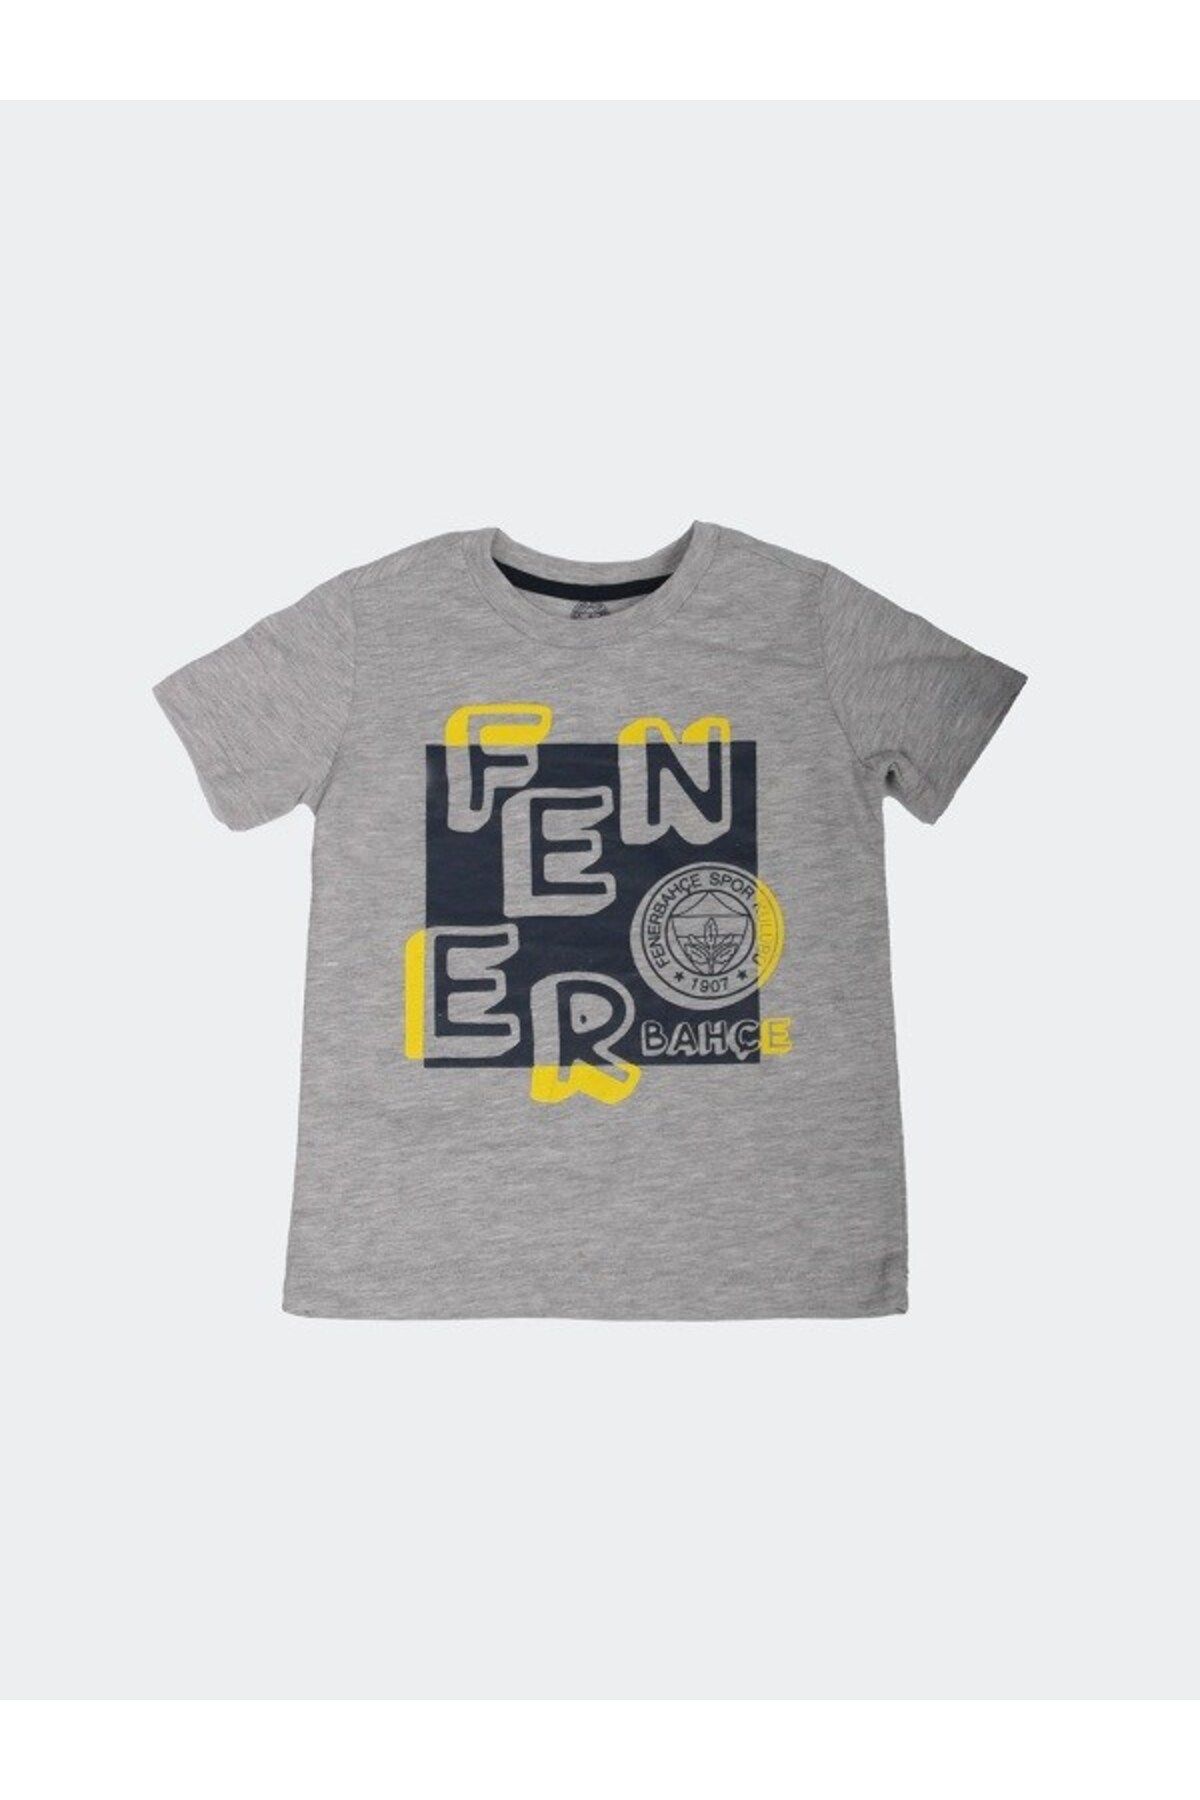 Fenerbahçe Fenerbahçe Orijinal Çocuk Tshirt